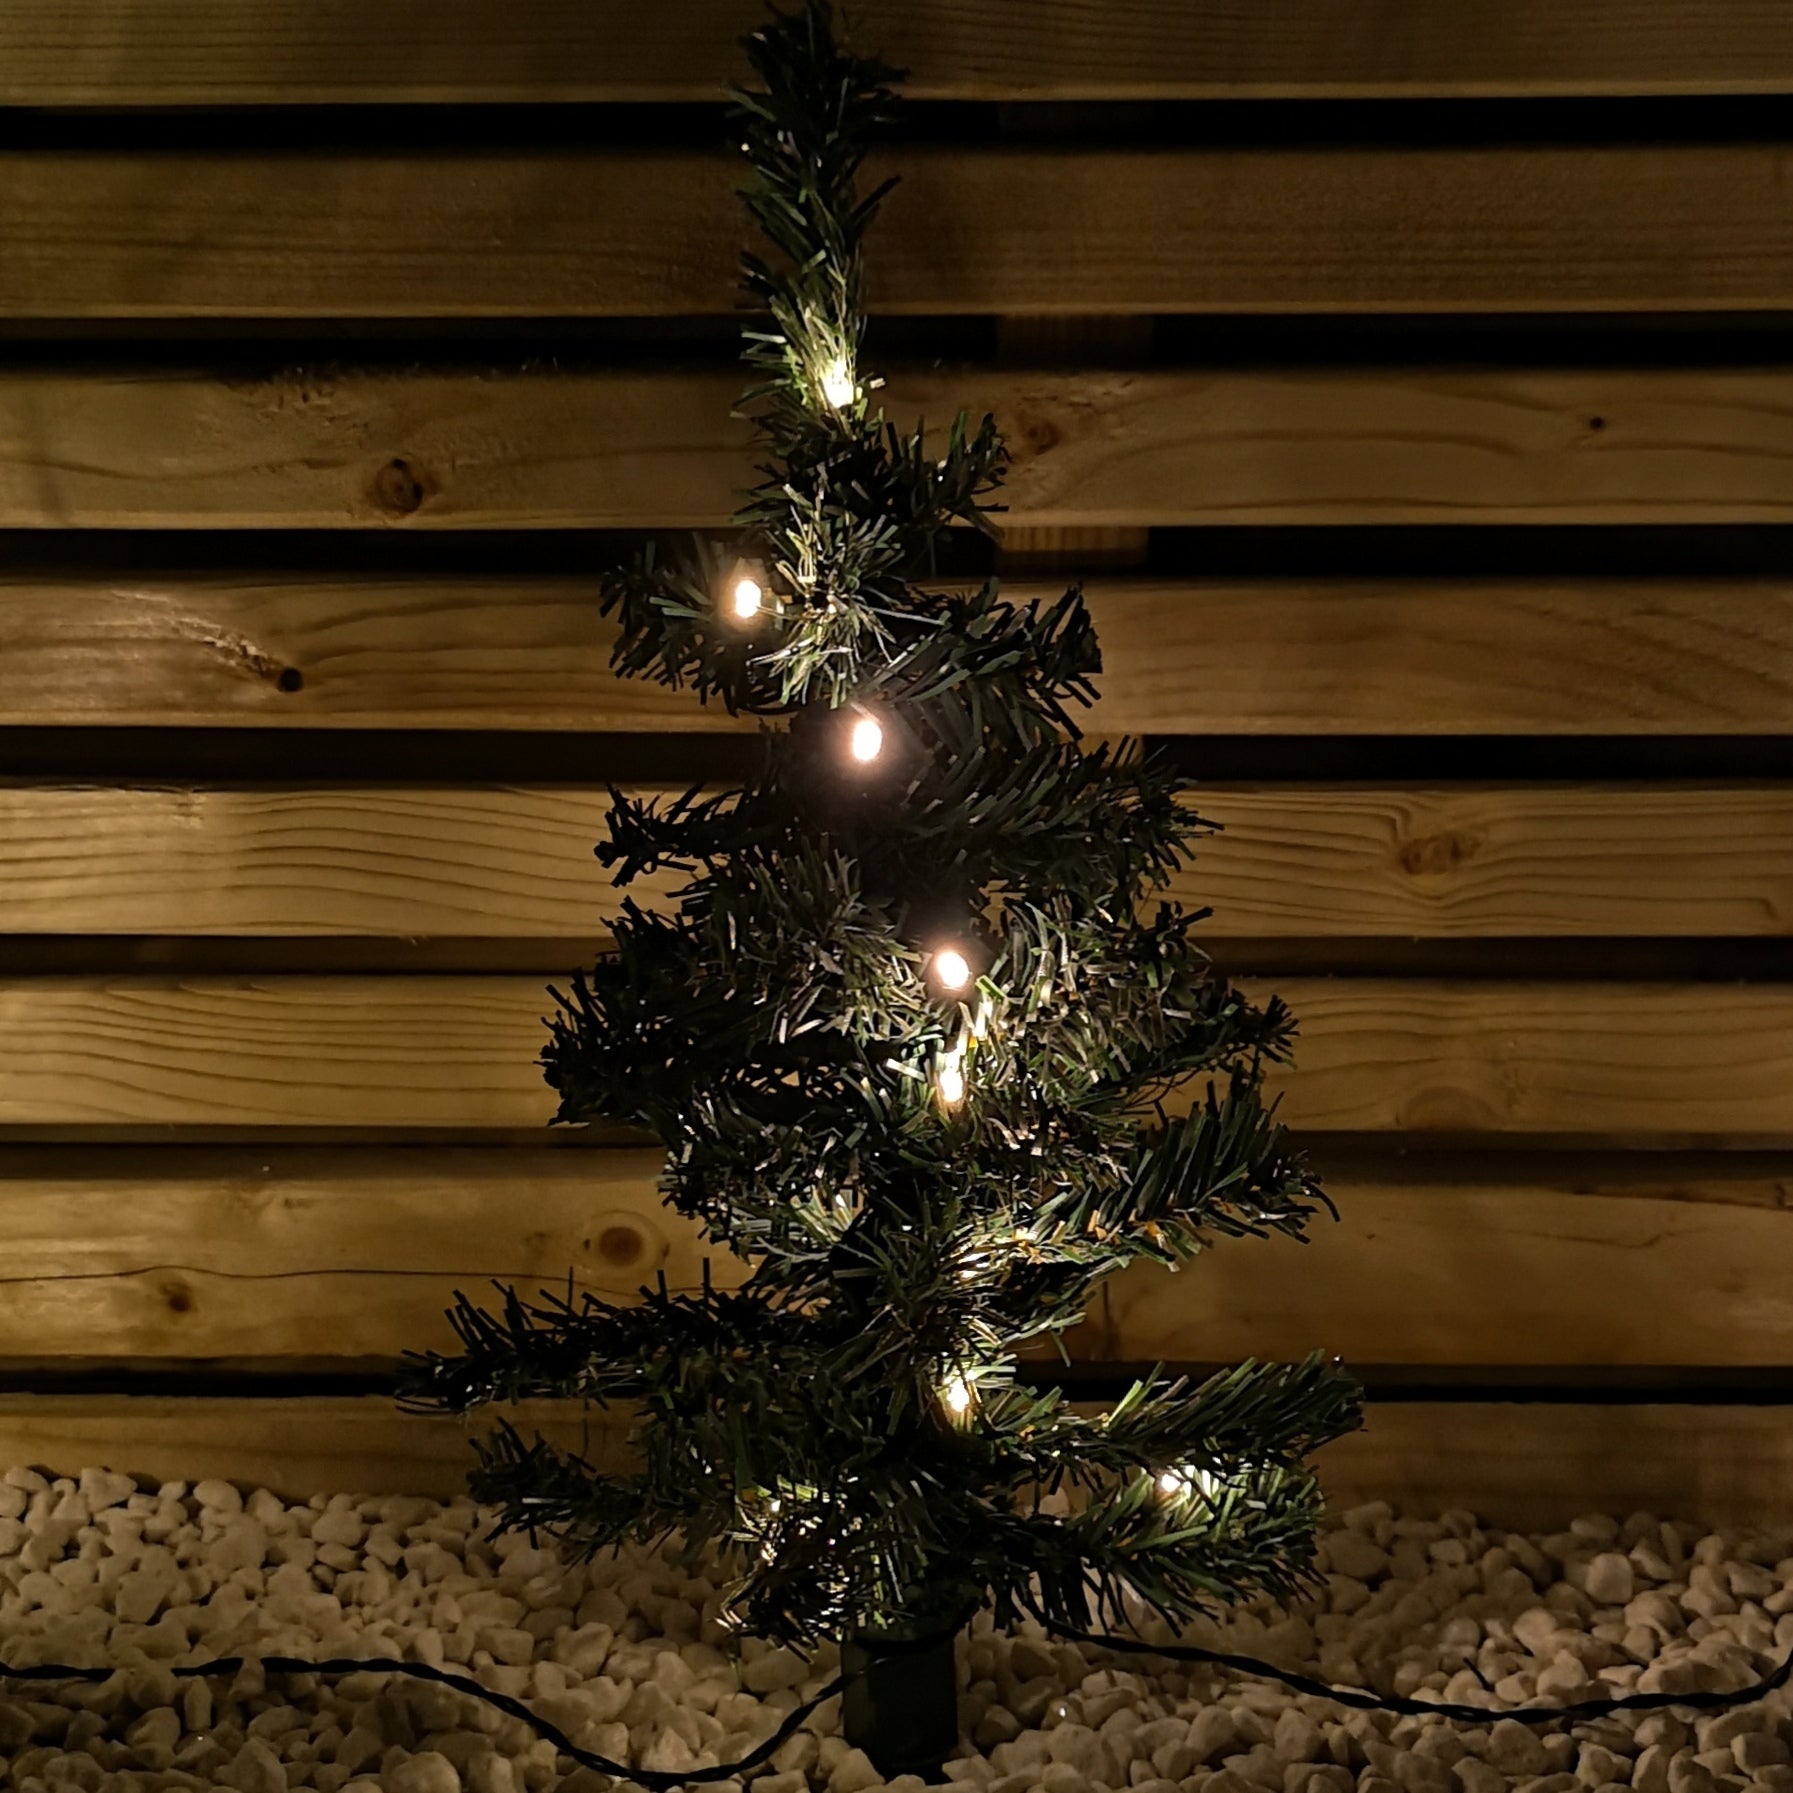 Set of 6 30cm Light up Christmas Tree Path Lights with Warm White LEDs